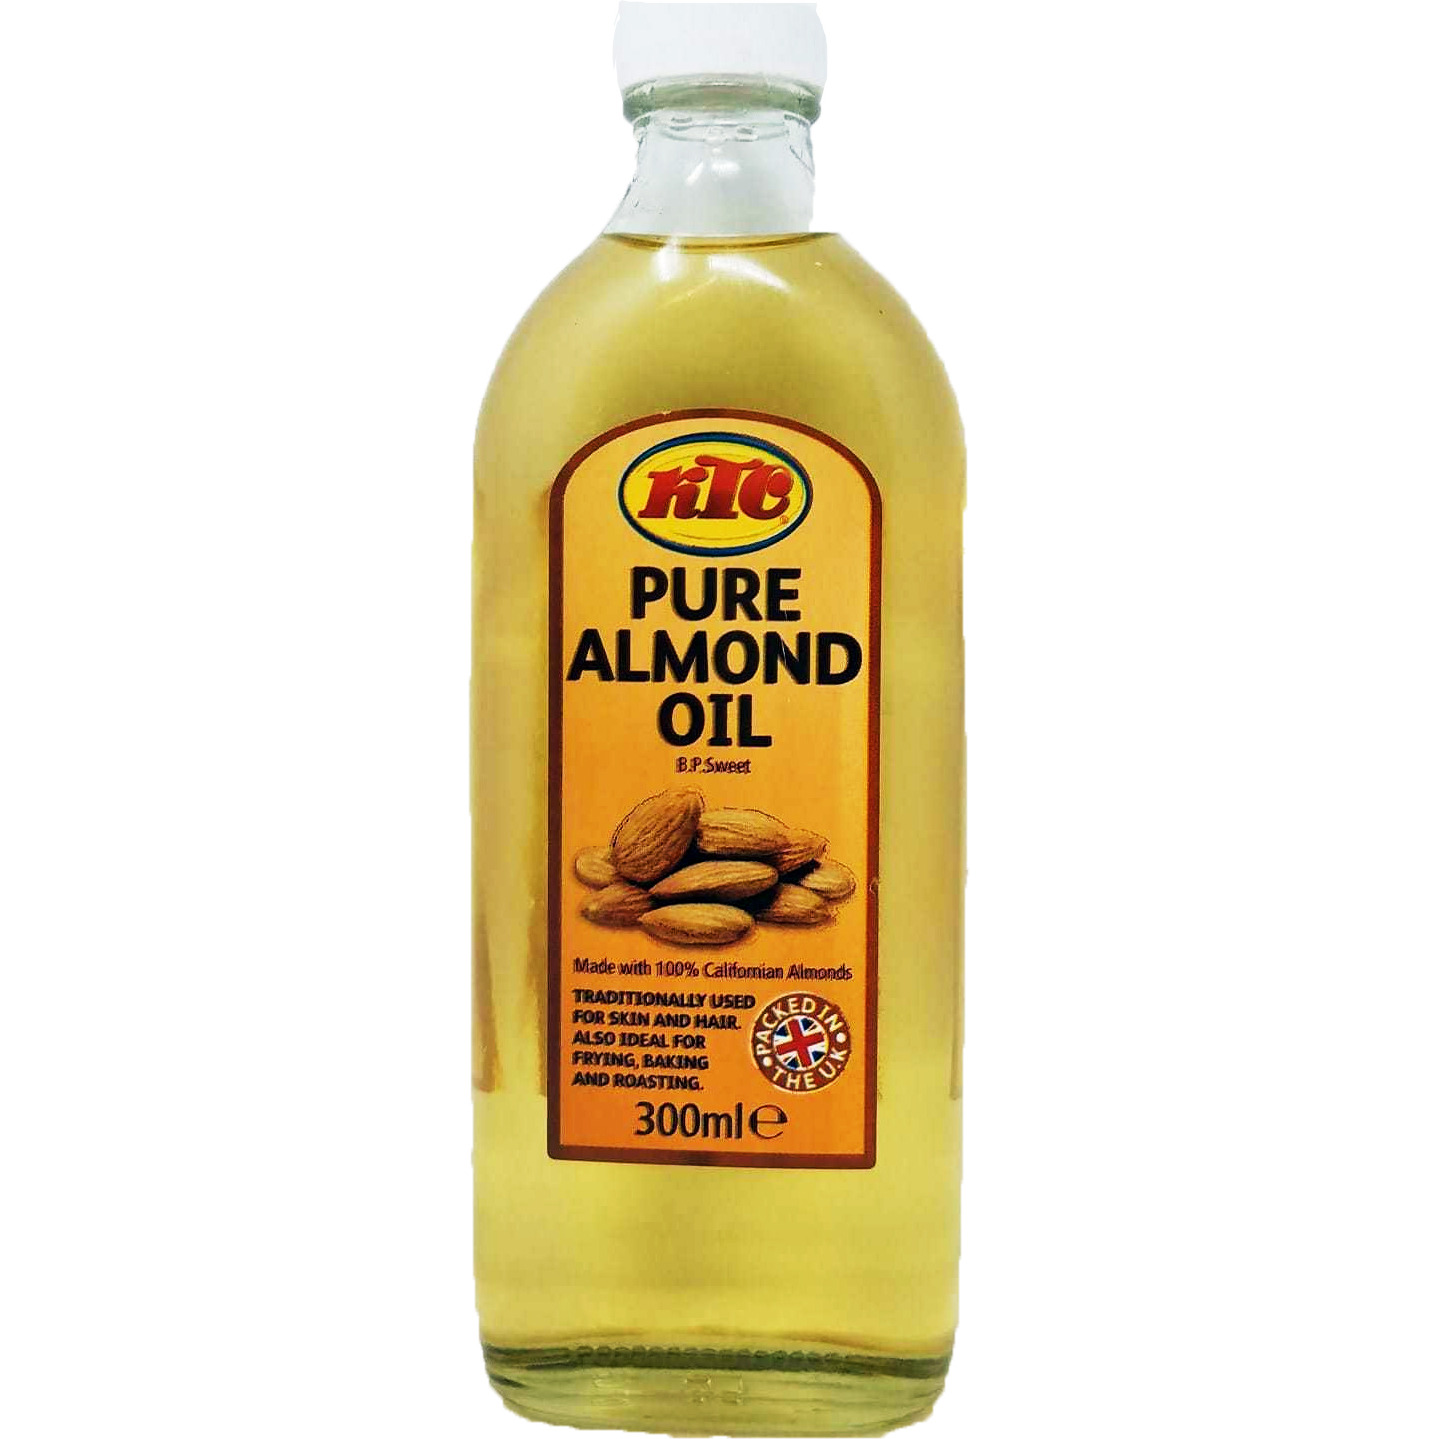 Case of 12 - Ktc Pure Almond Oil - 300 Ml (10.14 Fl Oz)